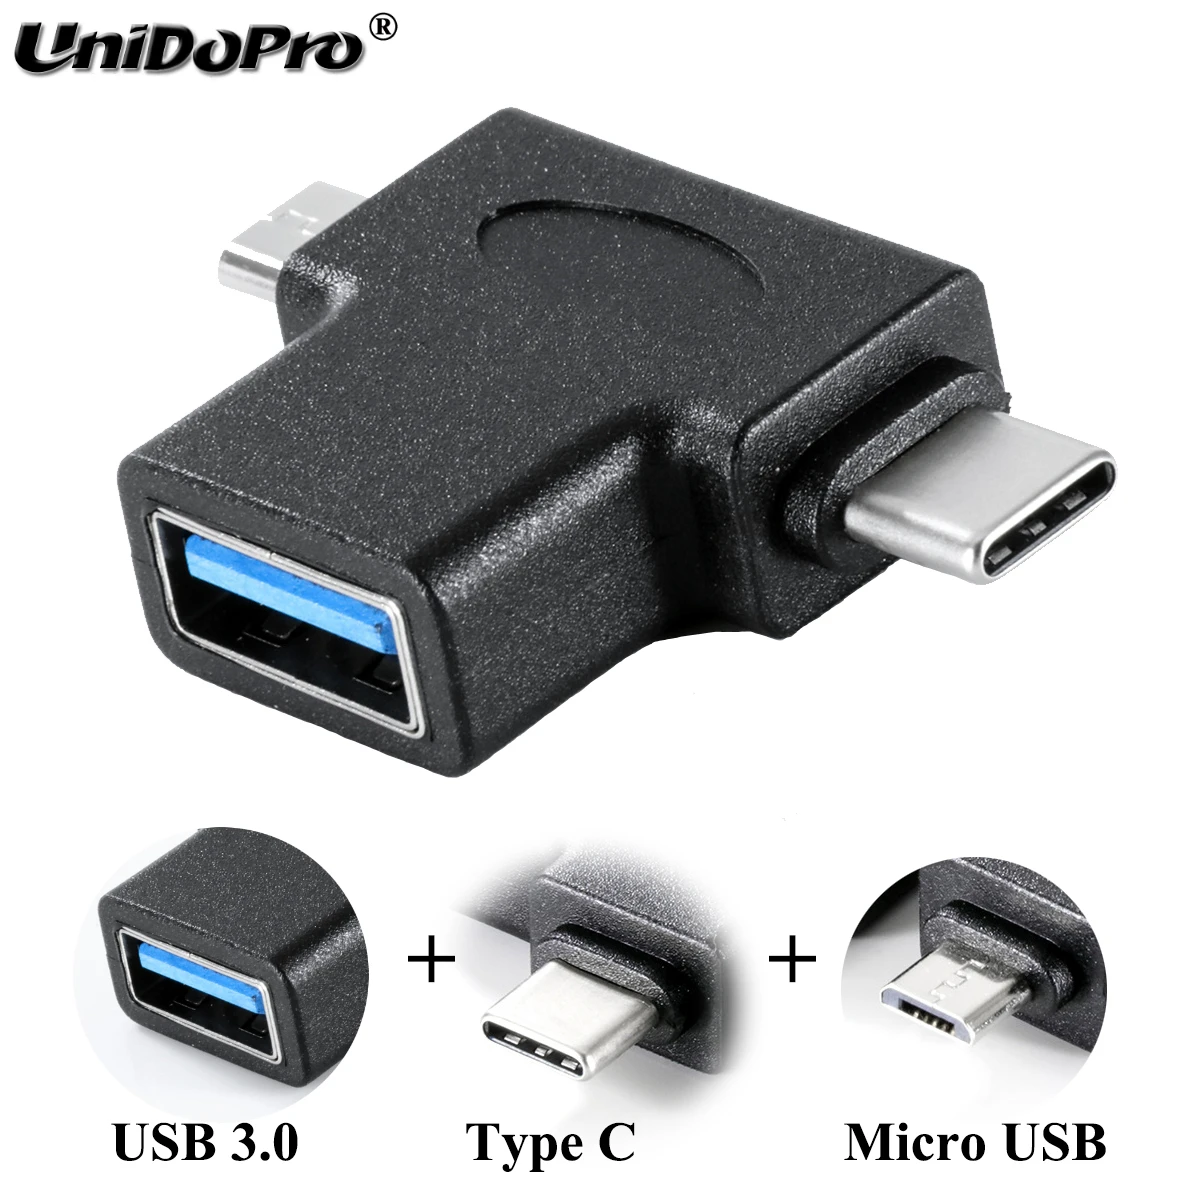 USB 3.0 OTG Adapter Micro USB Type C Converter for Huawei MatePad Mate 30  20 20X P20 P30 P40 Honor V30 9X Nova 6 5i 5Z 5T Pro|Phone Adapters &  Converters| - AliExpress